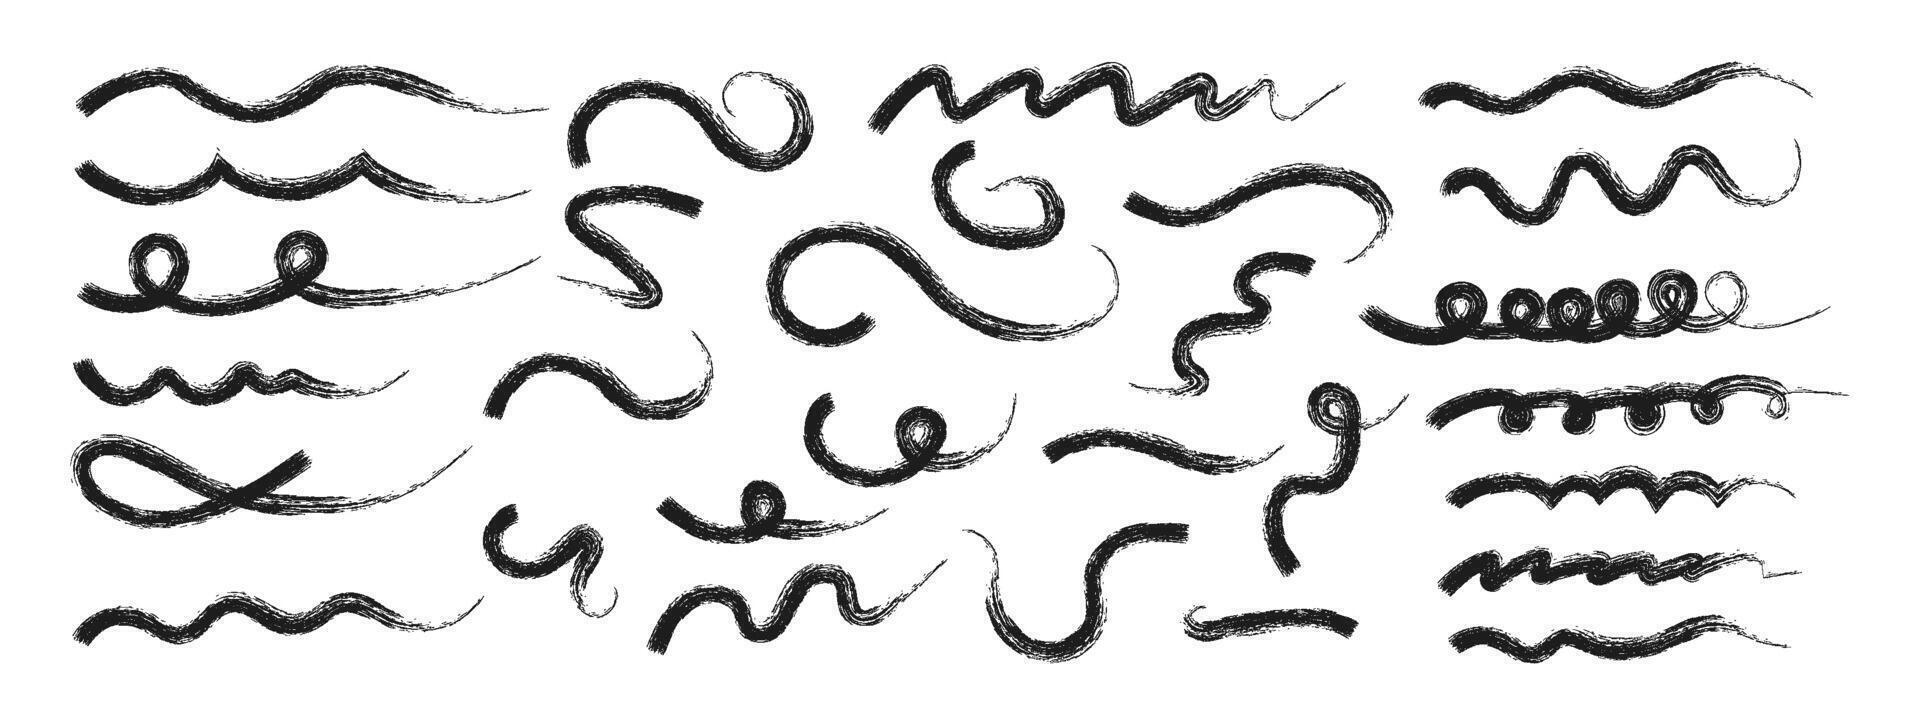 Hand drawn wavy strokes. Decorative vector graphic elements. Black brush strokes and pencil drawing. Typographic strokes and stroke tails.